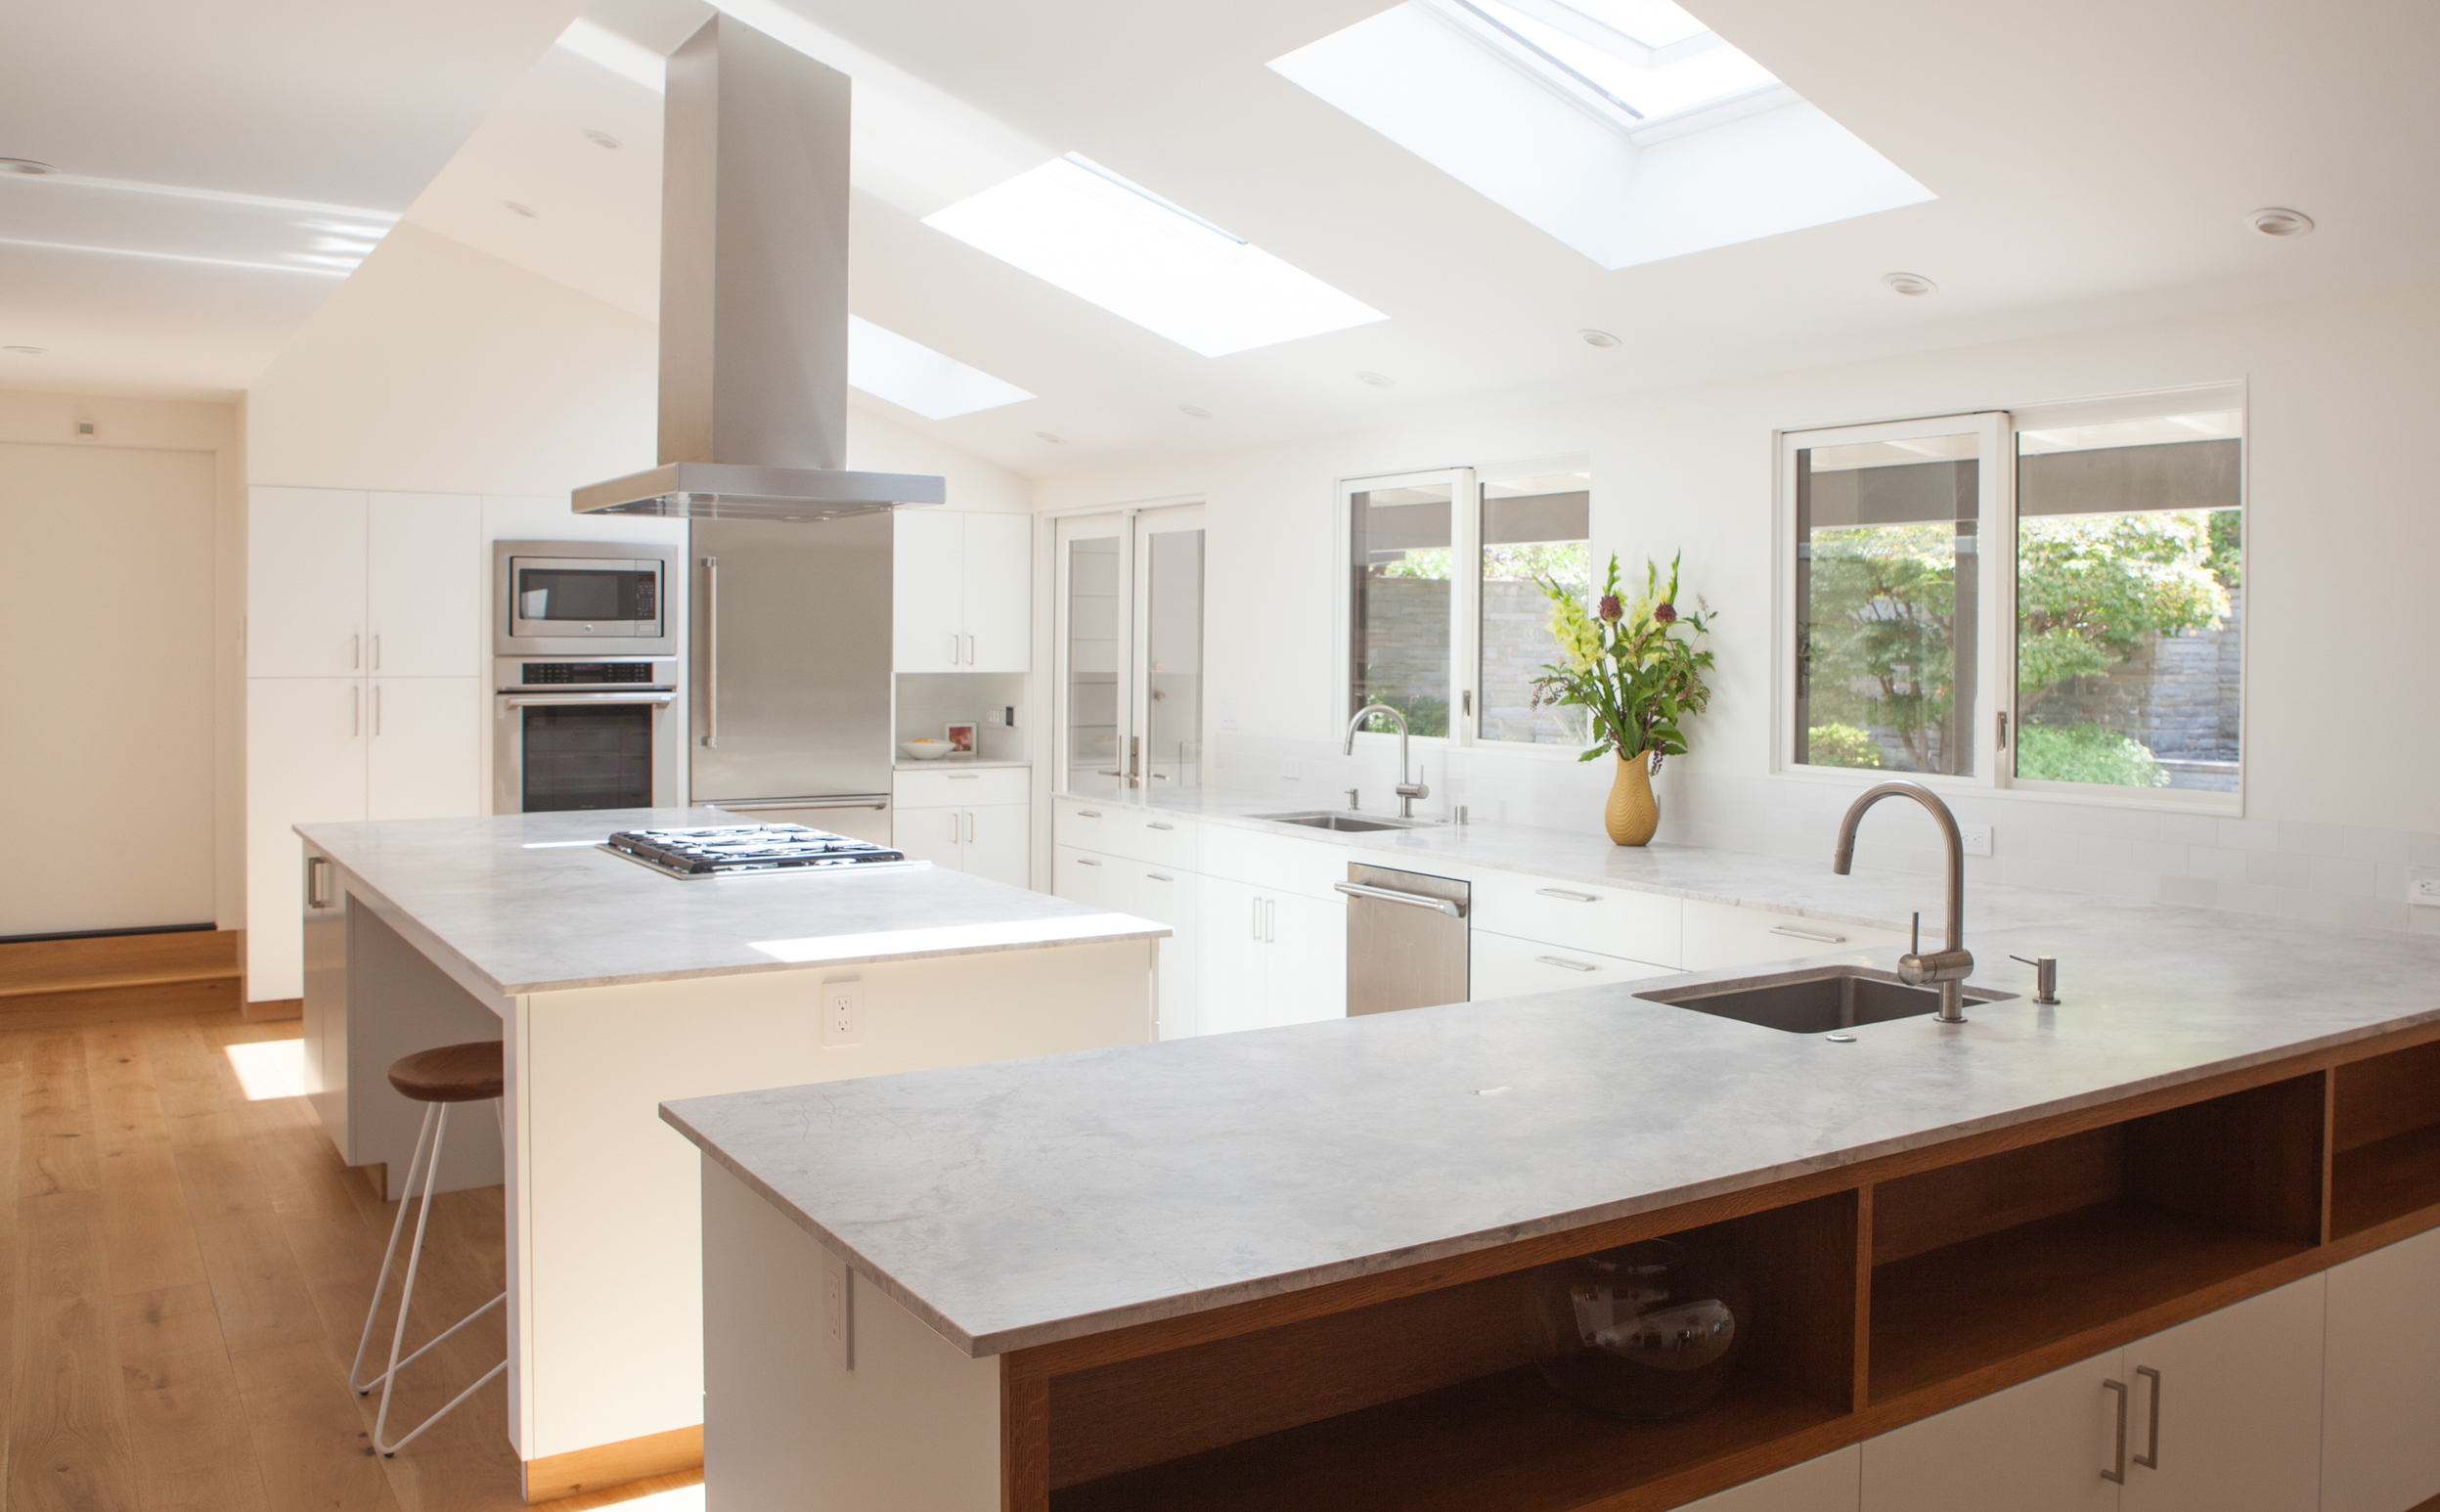 kitchen with skylights // Prospect House by Sky Lanigan for Medium Plenty 